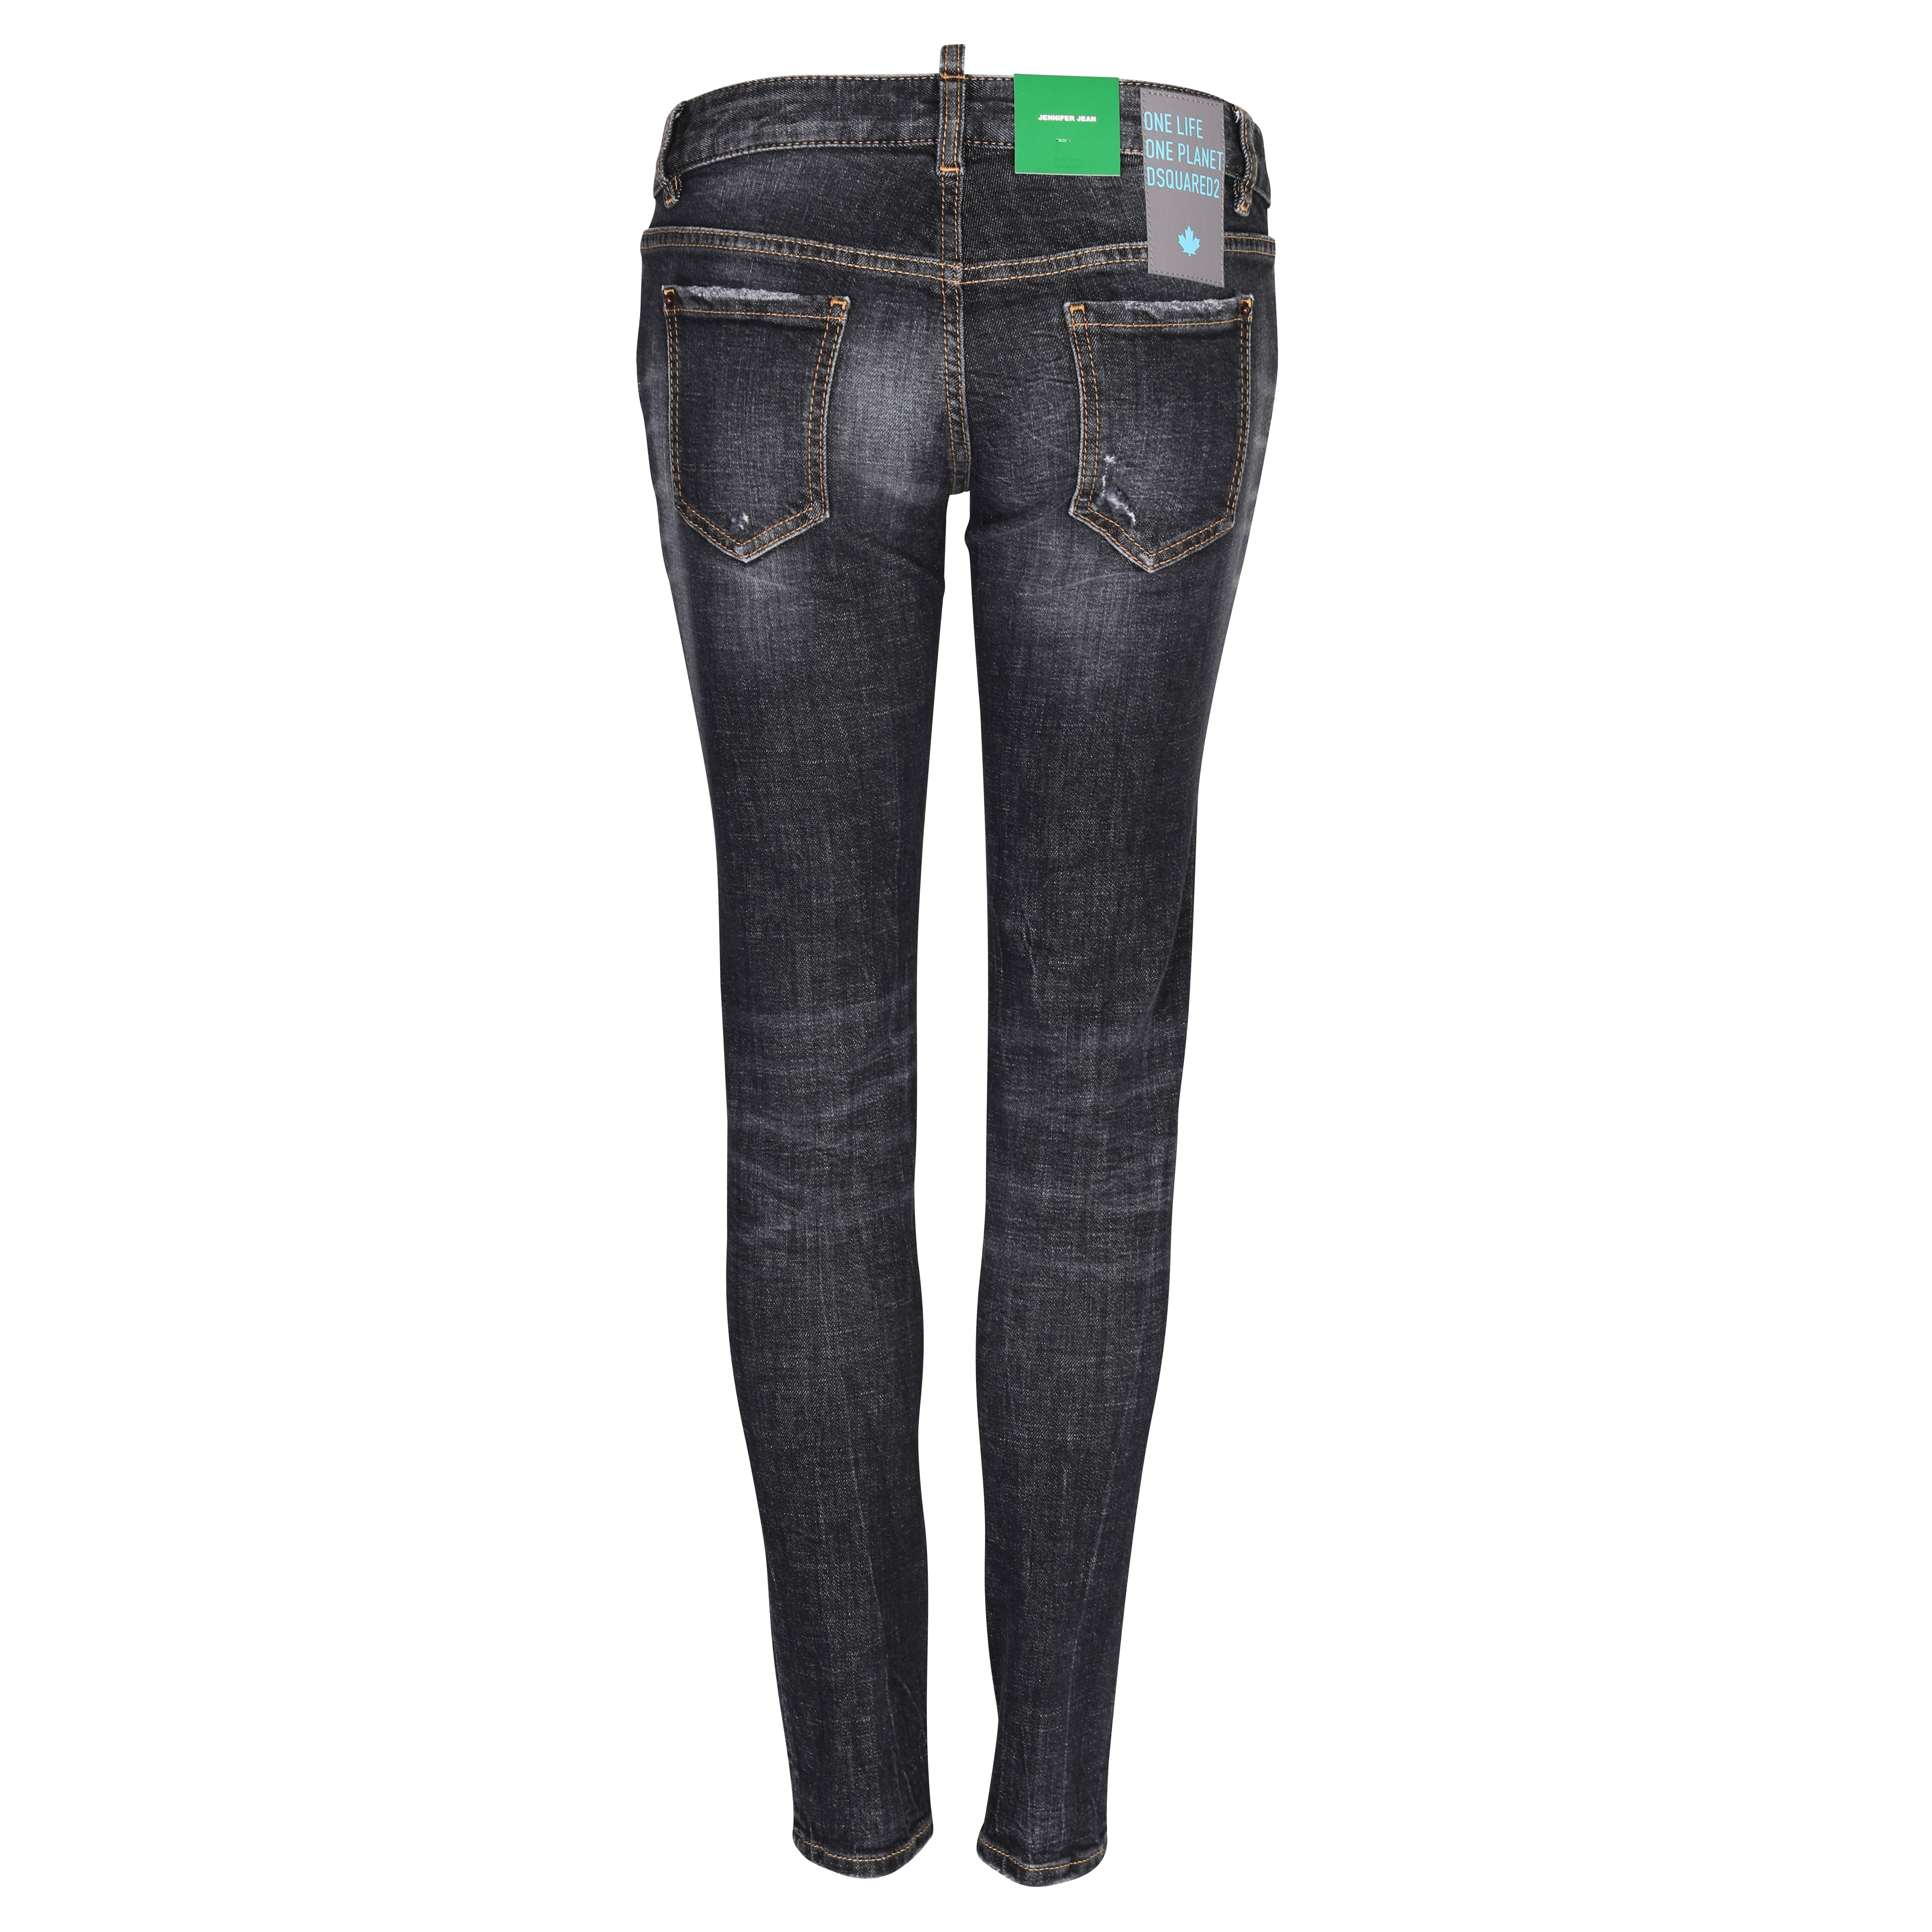 DSQUARED2 Green Label Jennifer Jeans in Washed Black IT 36 / DE 30